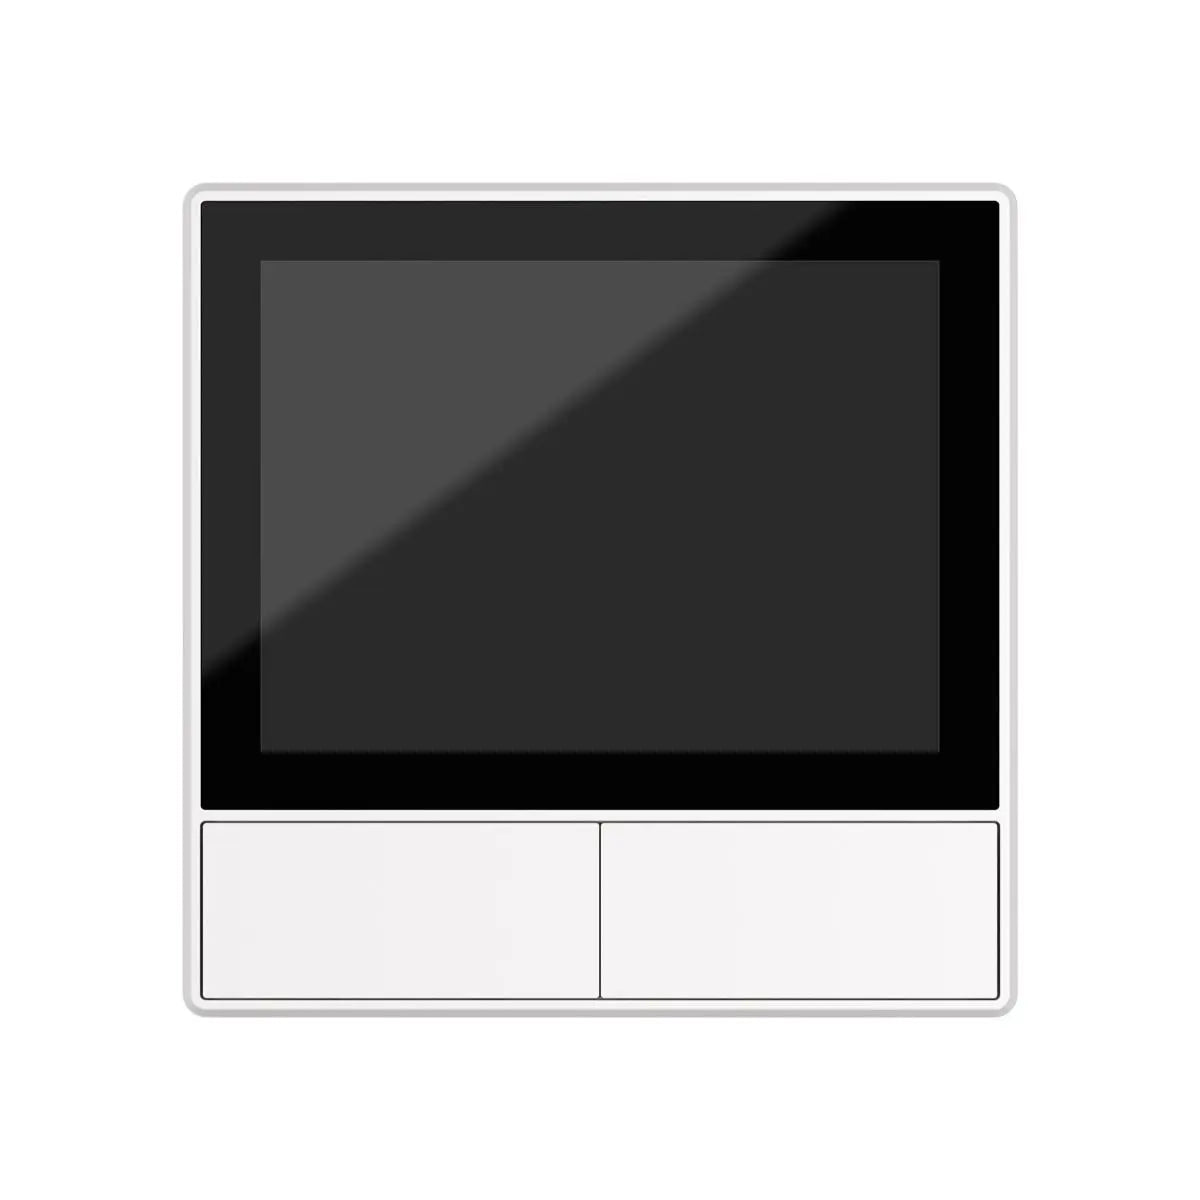 Sonoff NSPanel Ecrã Multifunções Inteligente wifi branco: Monitoriza a segurança da tua casa